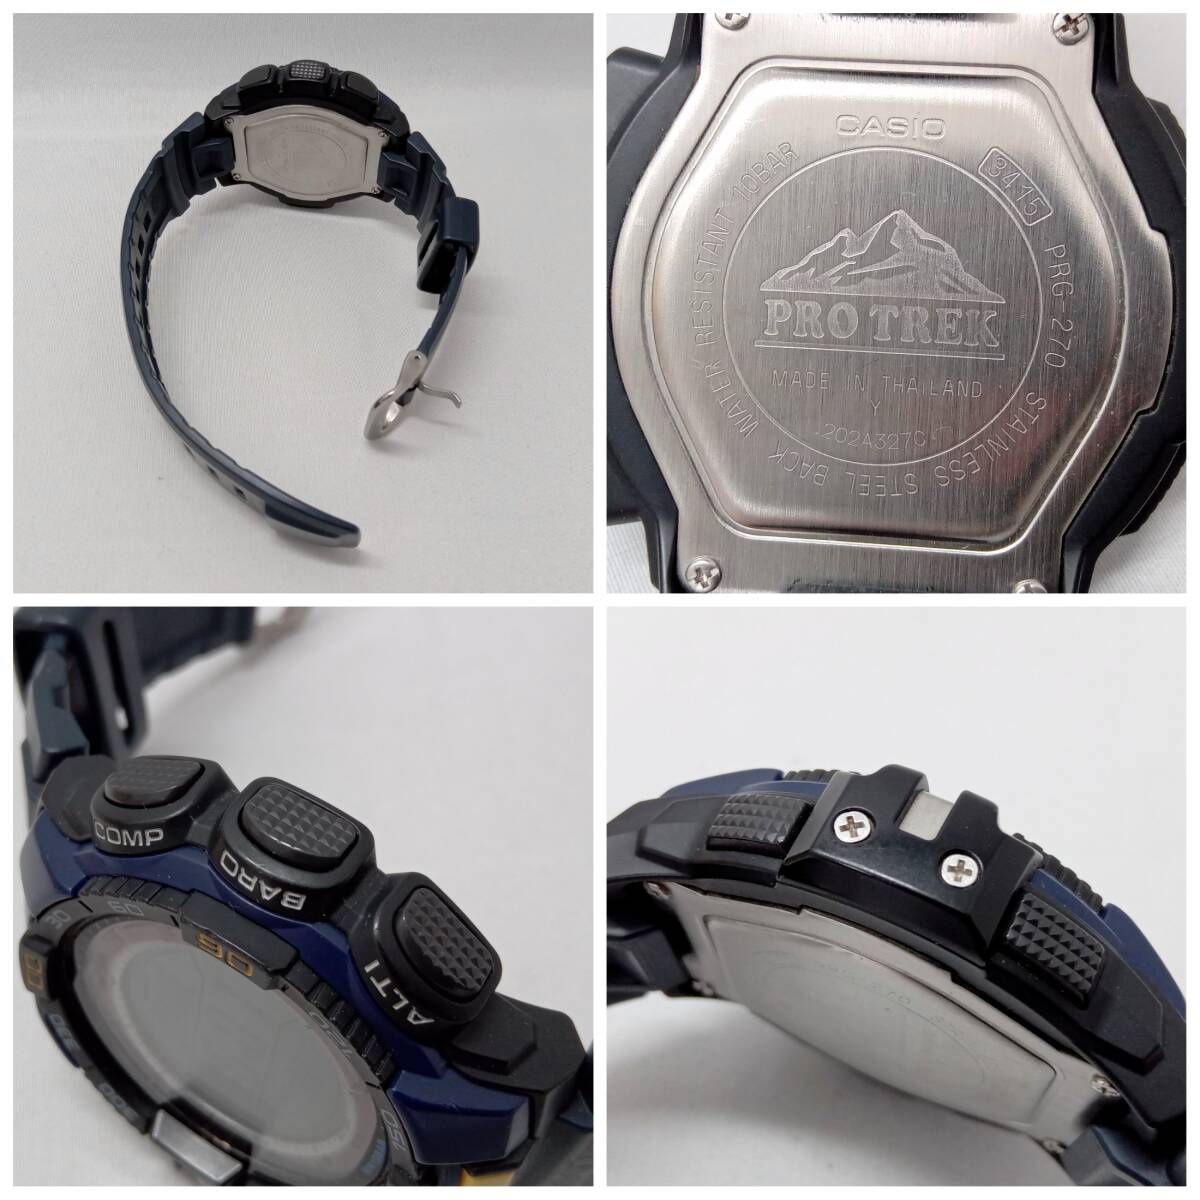 CASIO PROTREK PRO-270-2 腕時計 カシオ プロトレック トリプルセンサー タフソーラー ブラック ネイビーの画像5